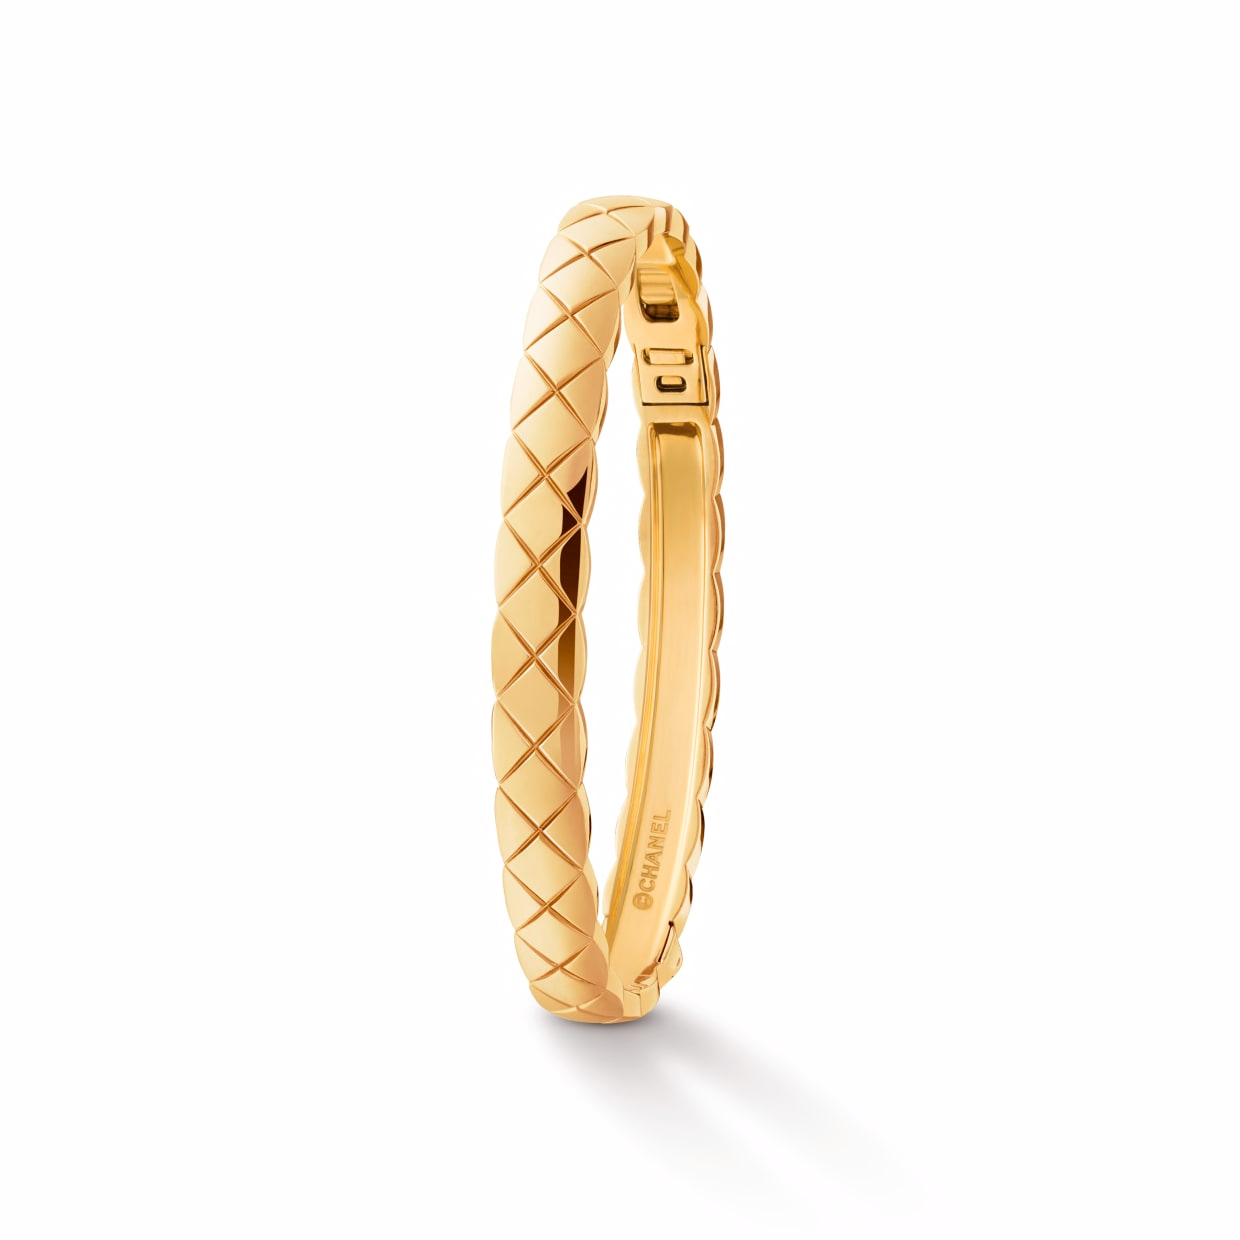 OEM/ODM Jewelry custom sterling silver bracelet bangle in 18K yellow gold manufacturer